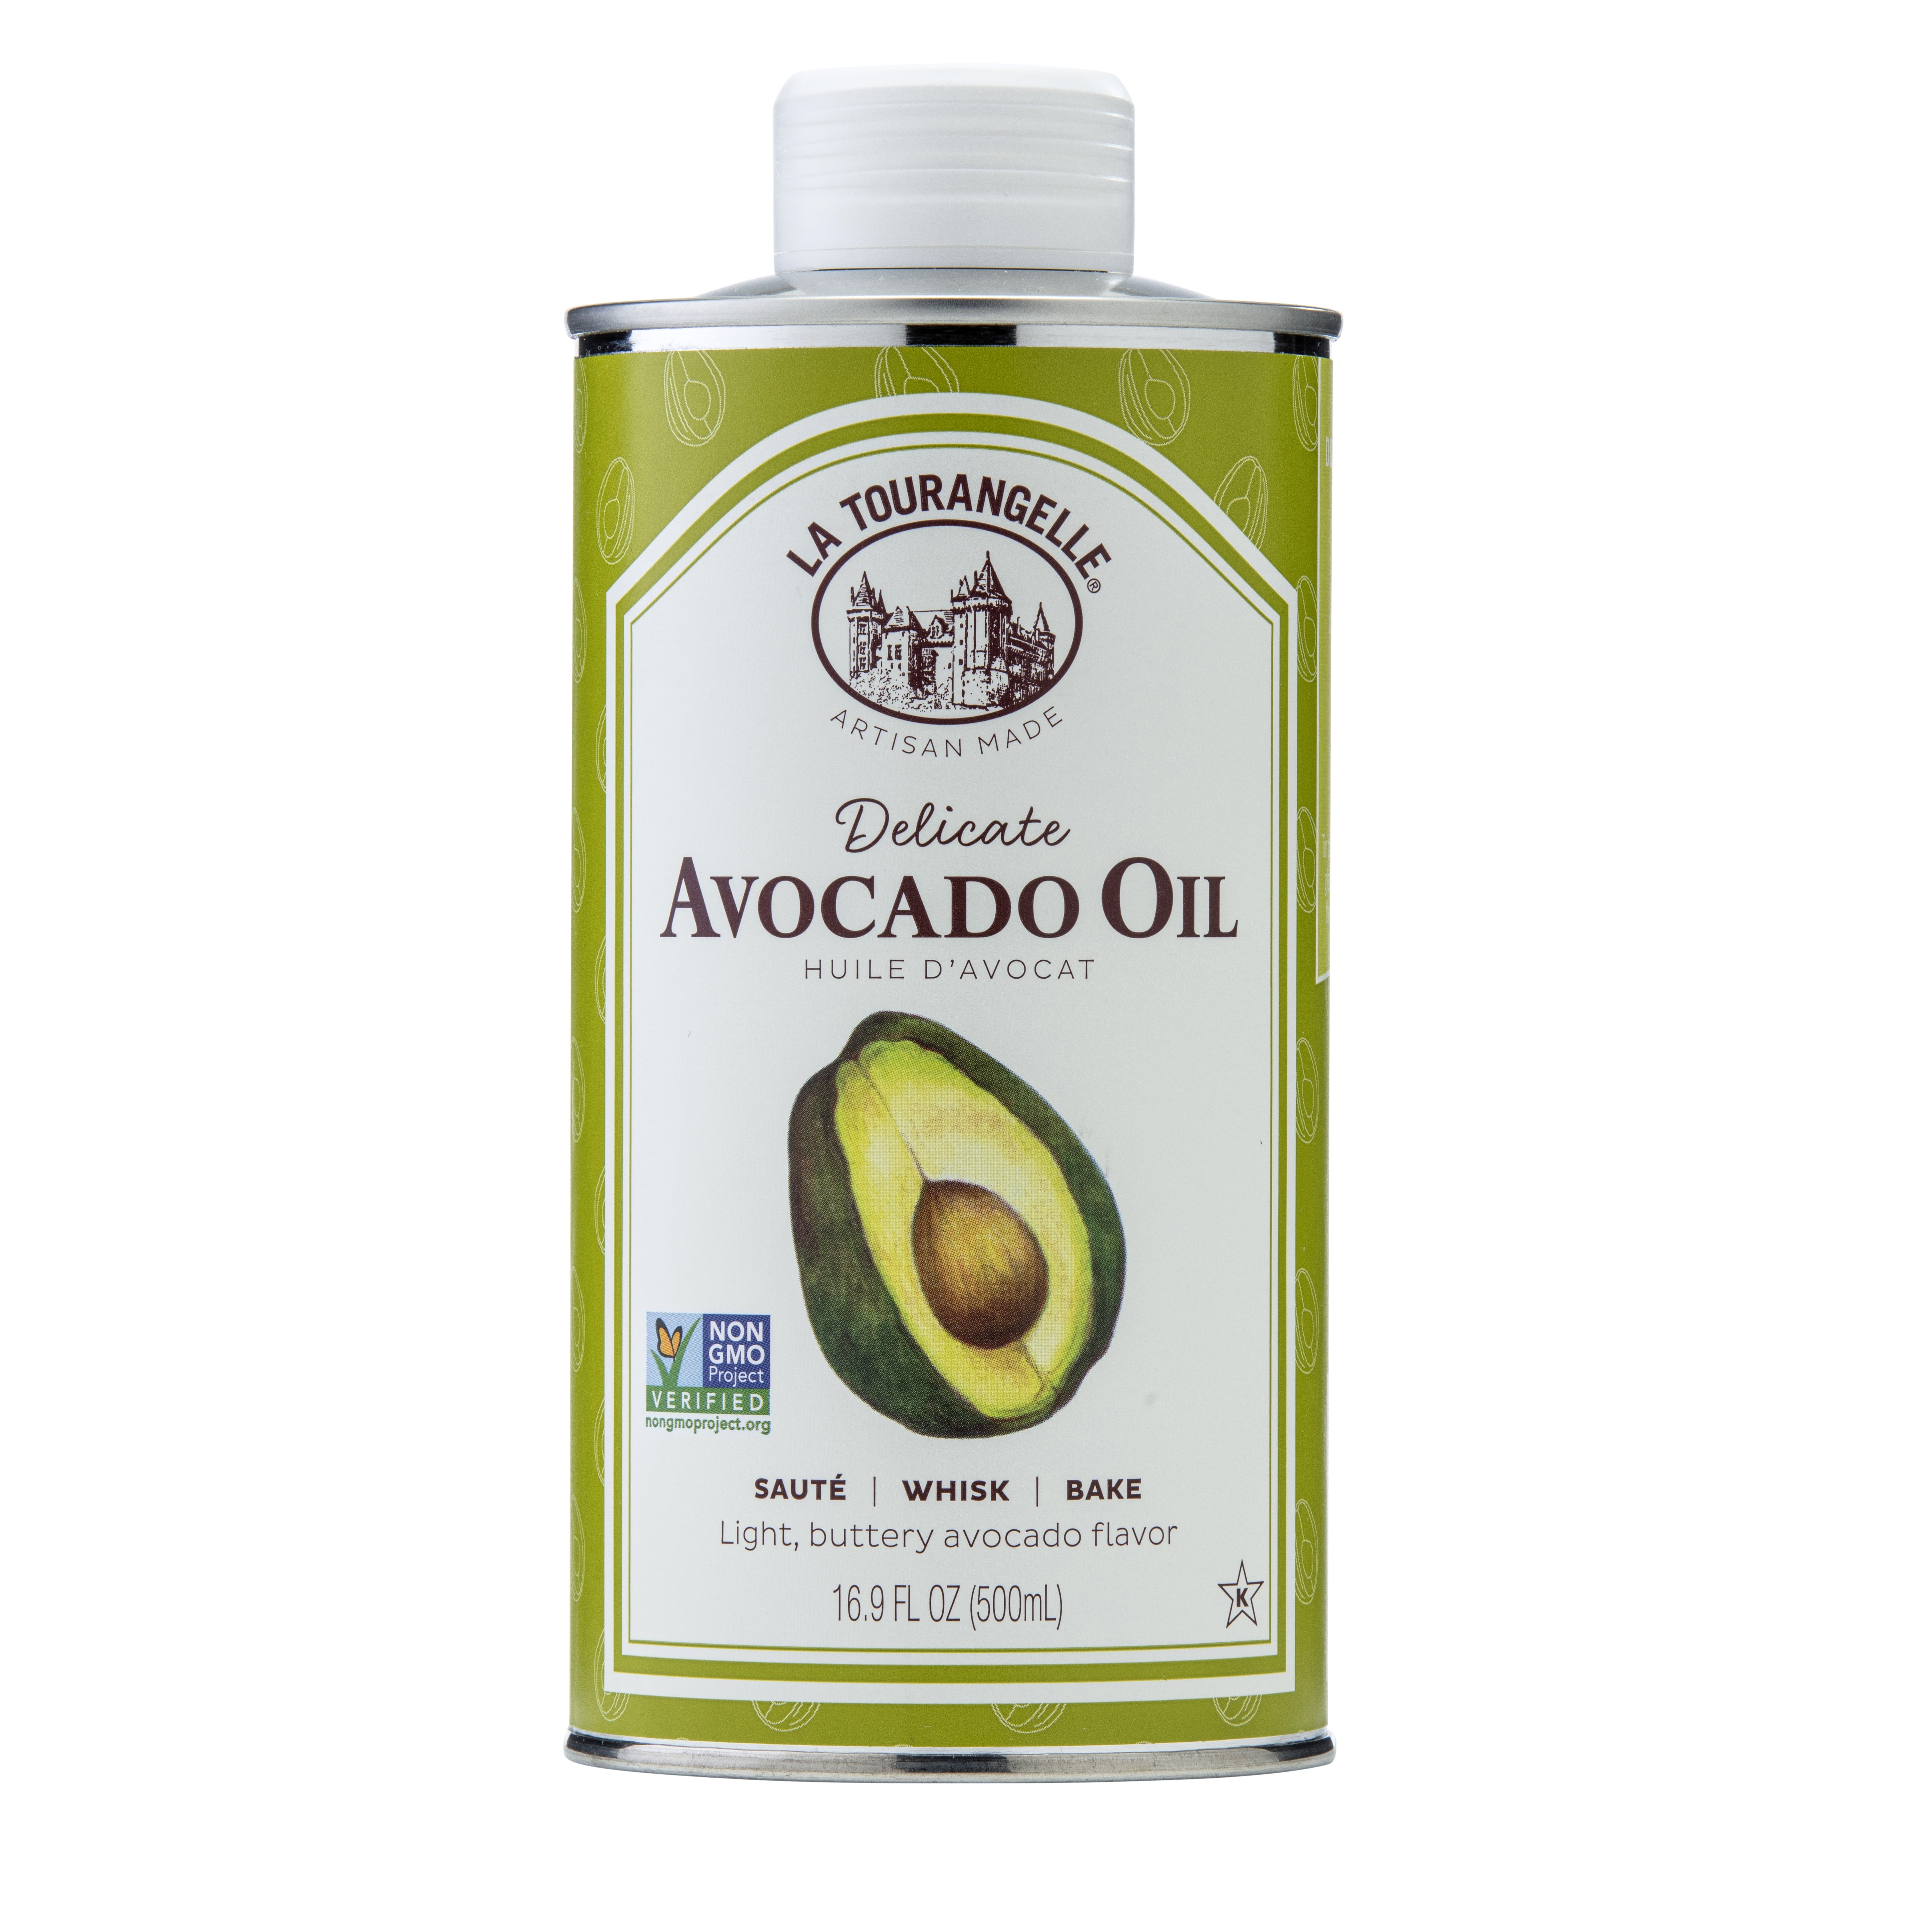 La Tourangelle Delicate Avocado Oil, 16.9 fl oz (500 ml)